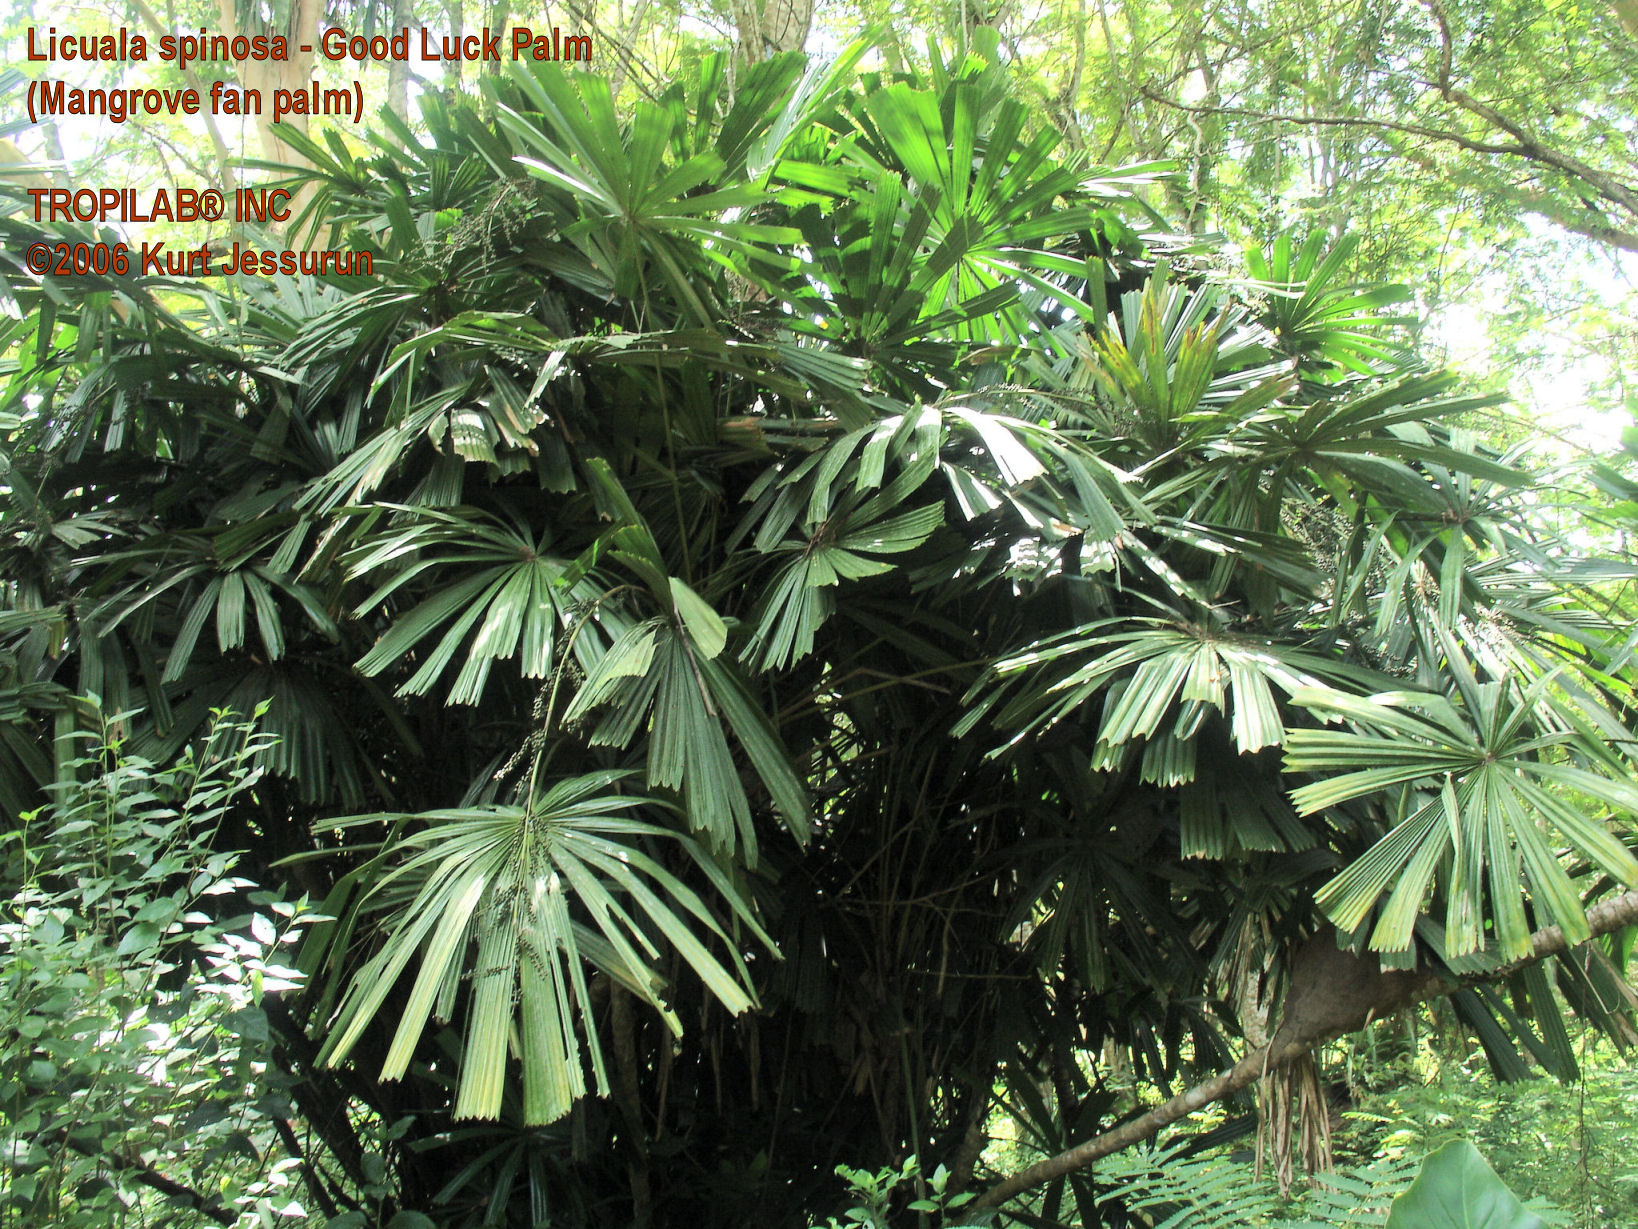 Licuala spinosa - Good luck palm